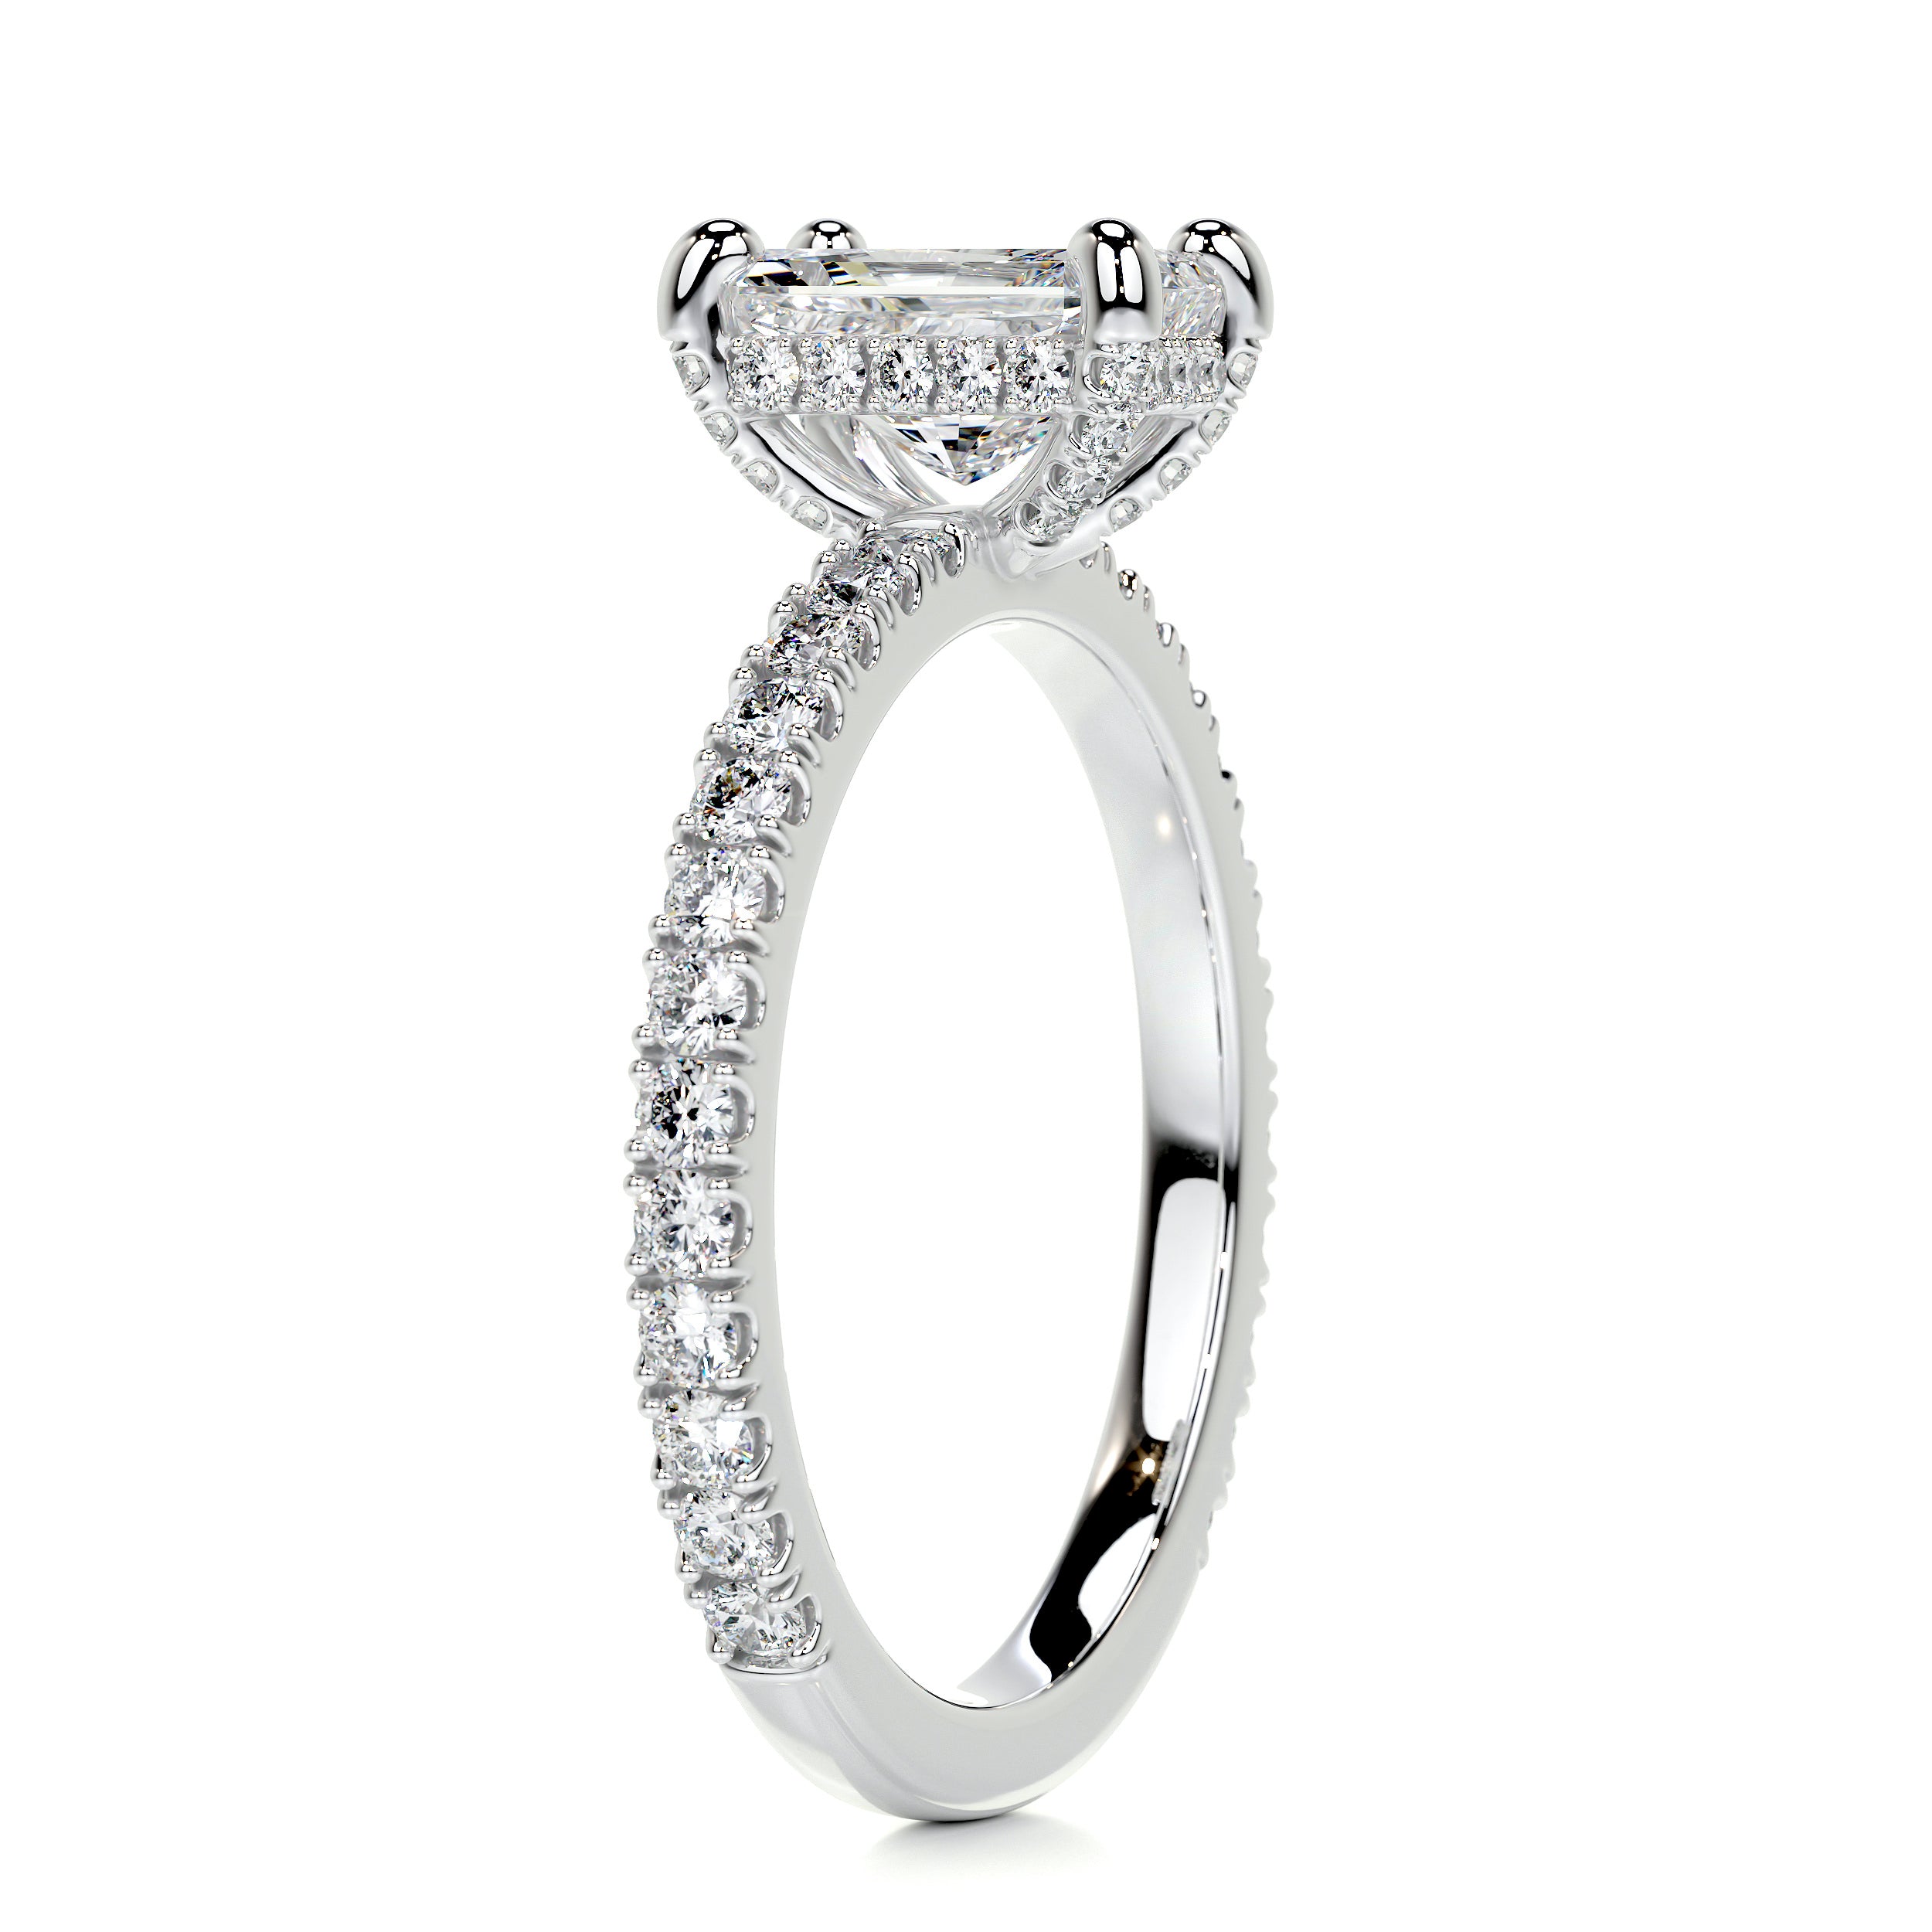 Deborah Diamond Engagement Ring   (1.5 Carat) -Platinum